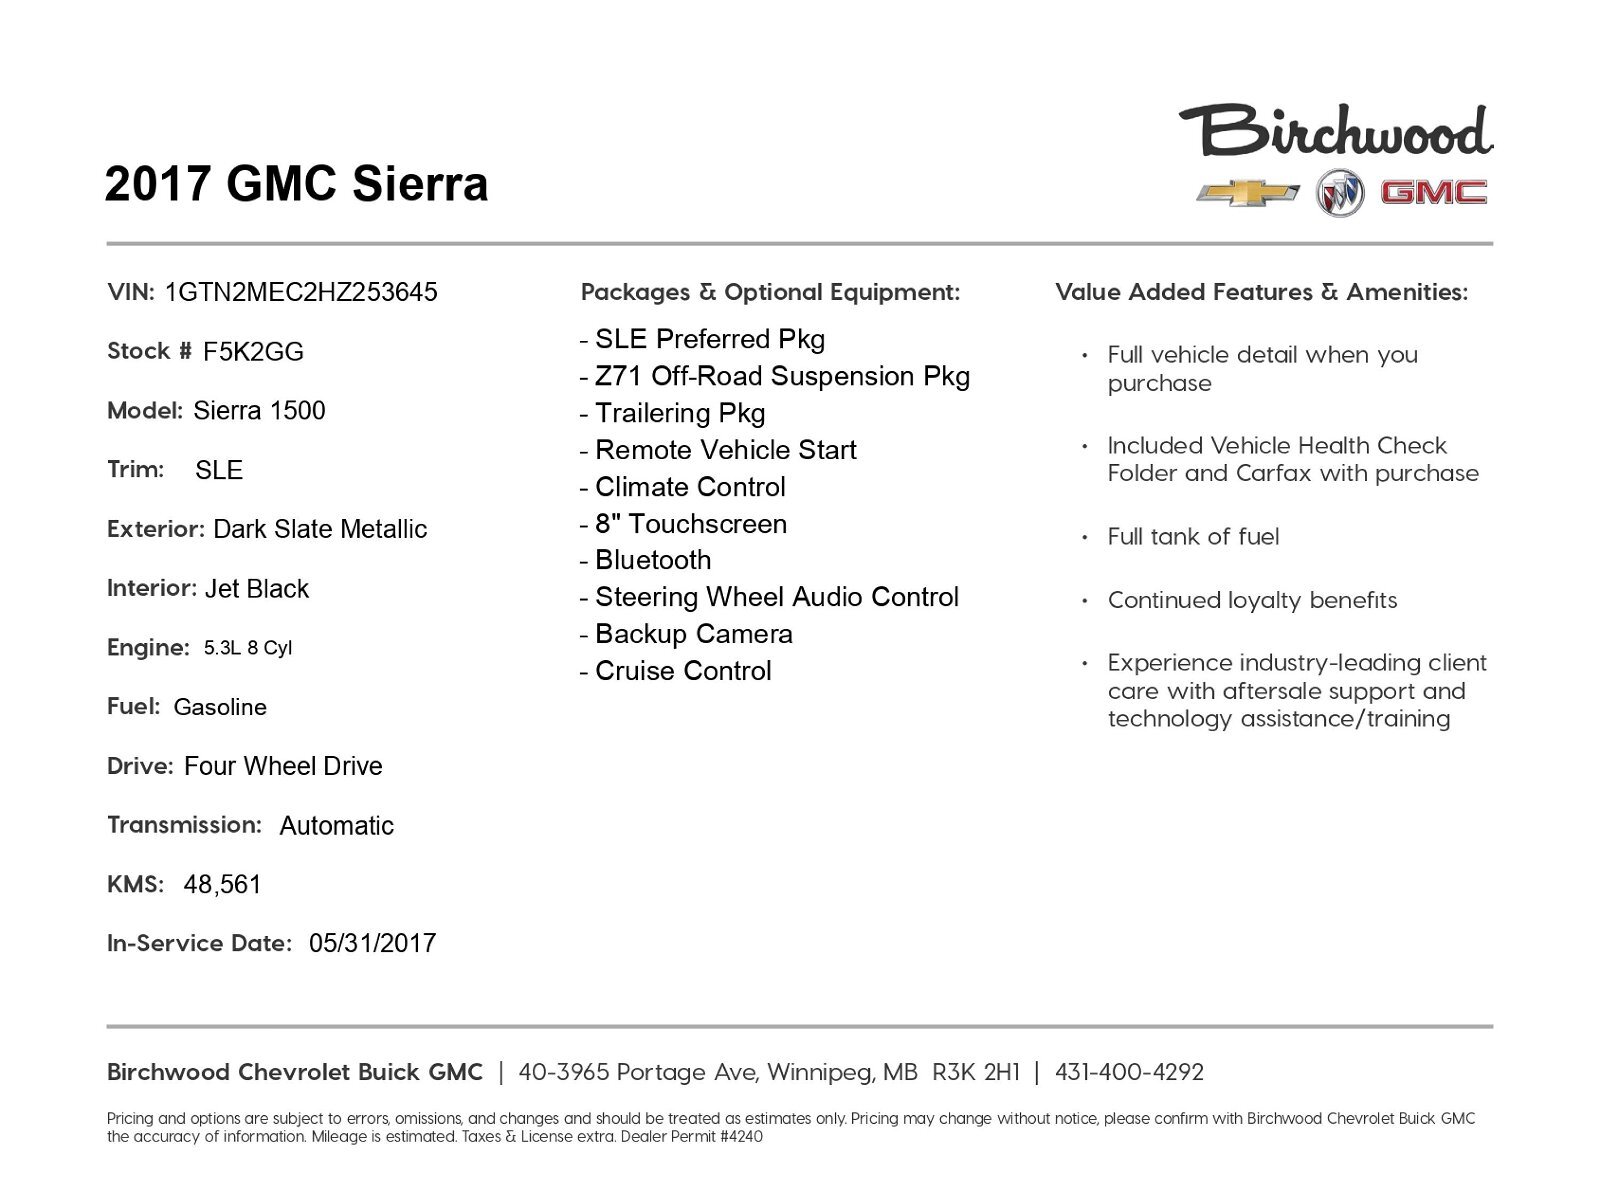 2017 GMC Sierra 1500 SLE 2-year Maintenance Free!